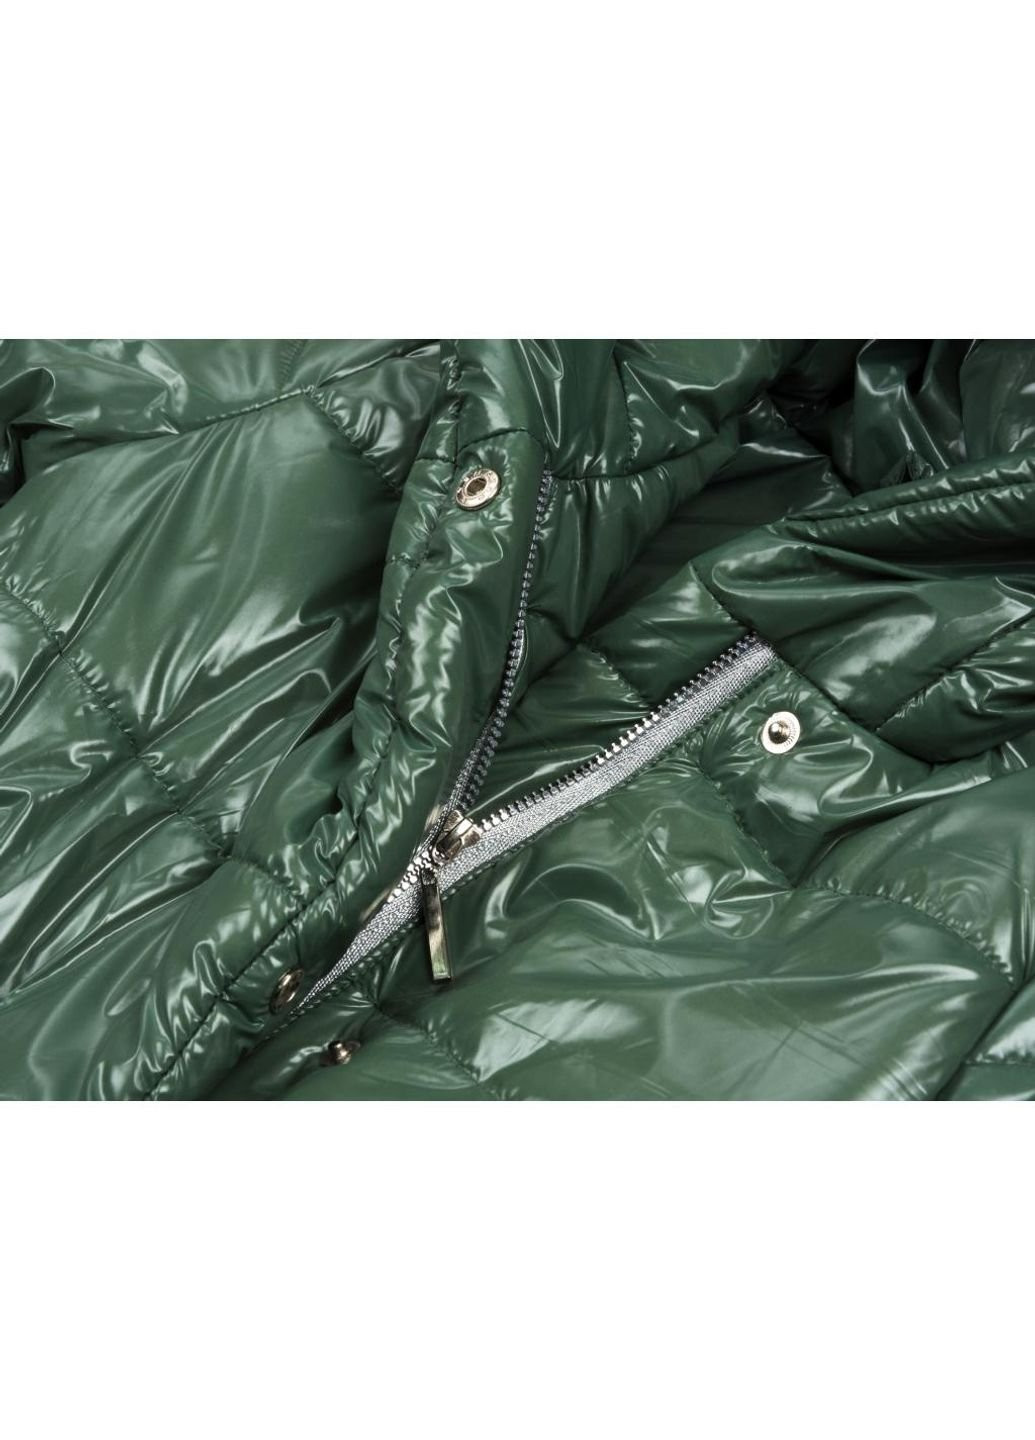 Оливкова демісезонна куртка подовжена "felice" (19709-134-green) Brilliant